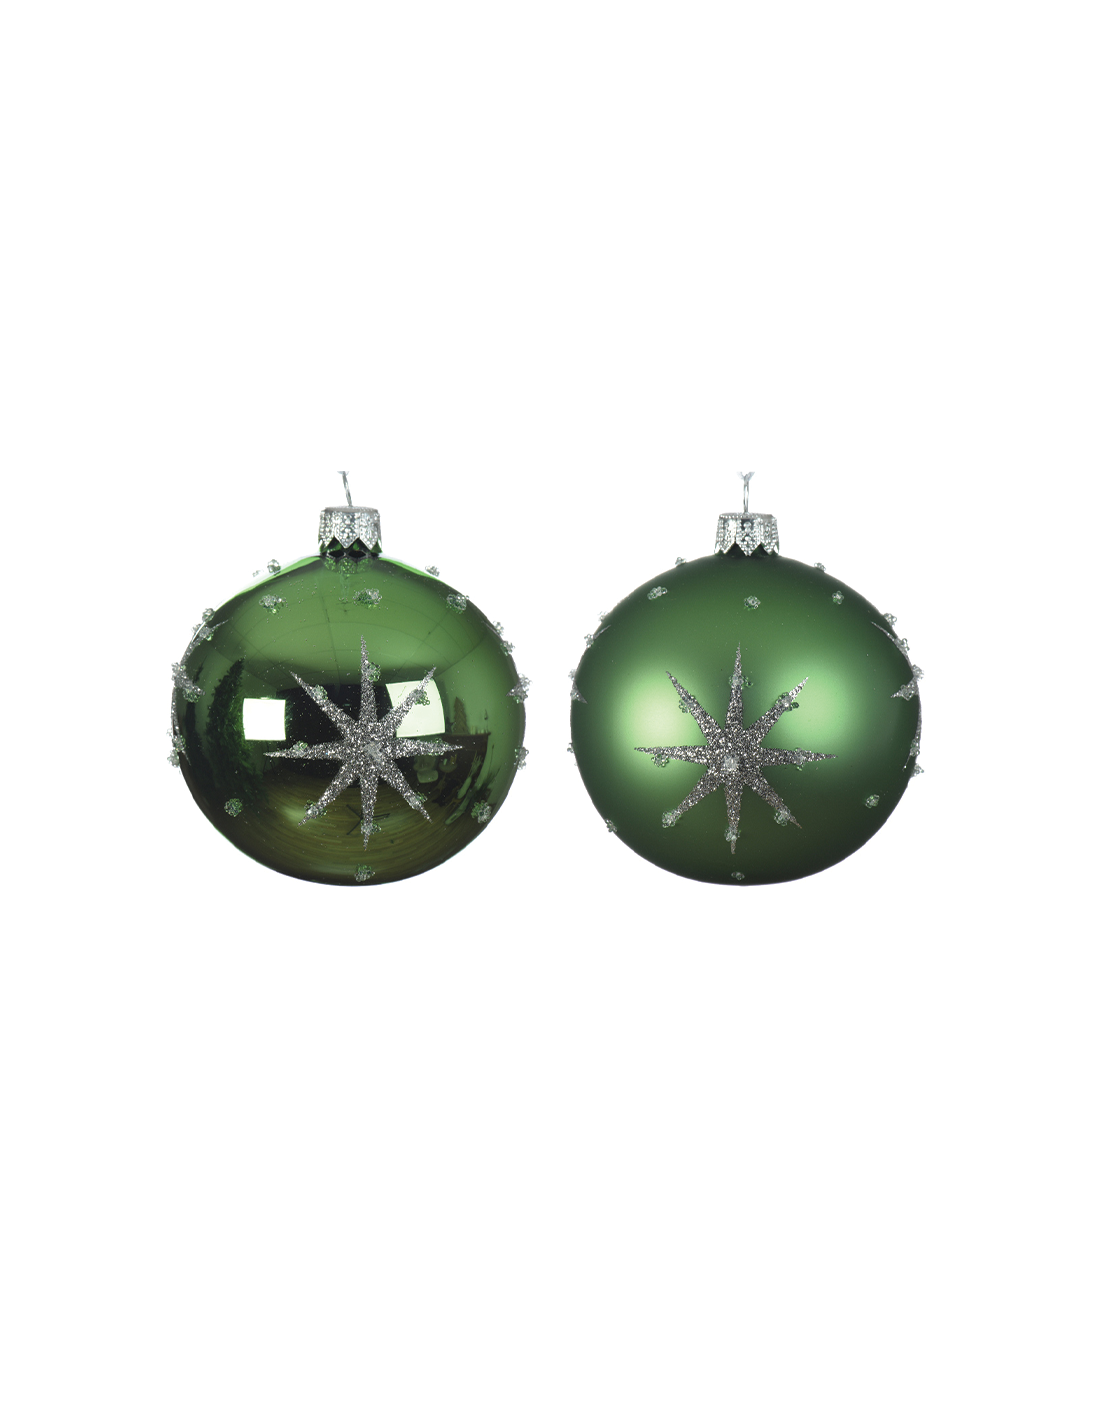 Kalėdinis eglės žaisliukas GLASS MISTLETOE STAR, žalios sp., 2 rūšių, 8 cm, 1 vnt.